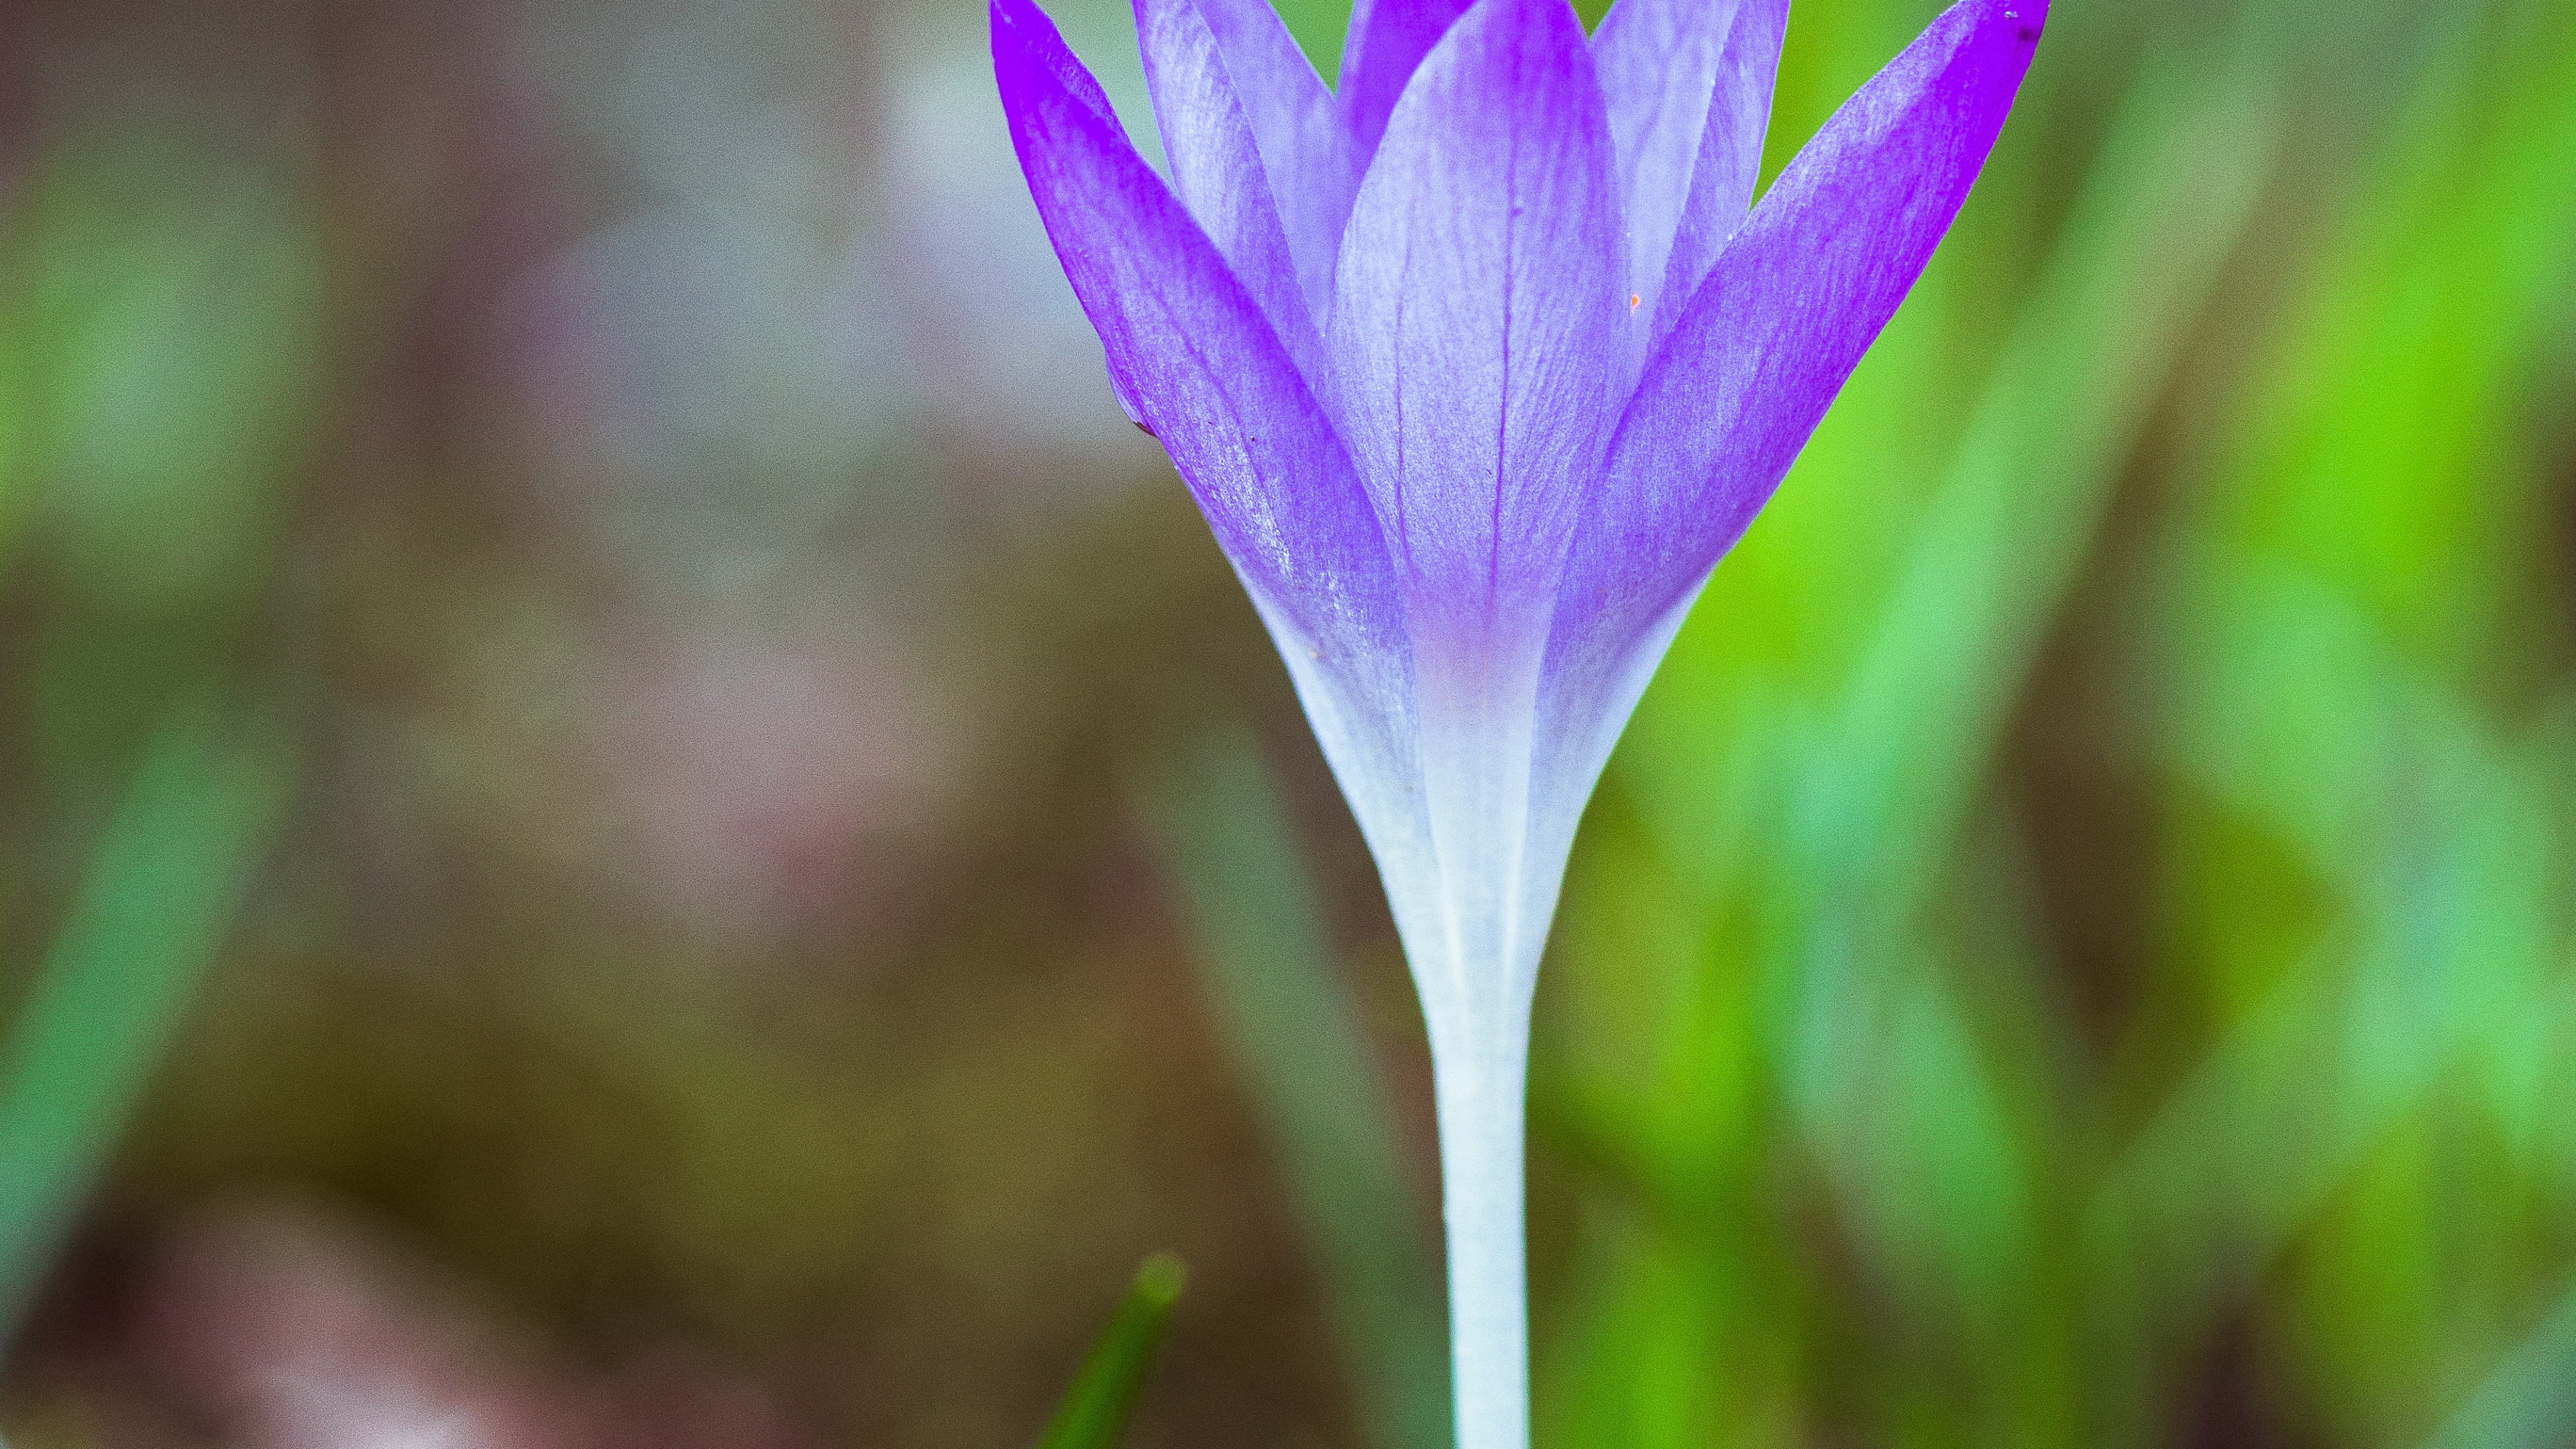 Purple Crocus Flower in Bloom During Daytime. Wallpaper in 3840x2160 Resolution